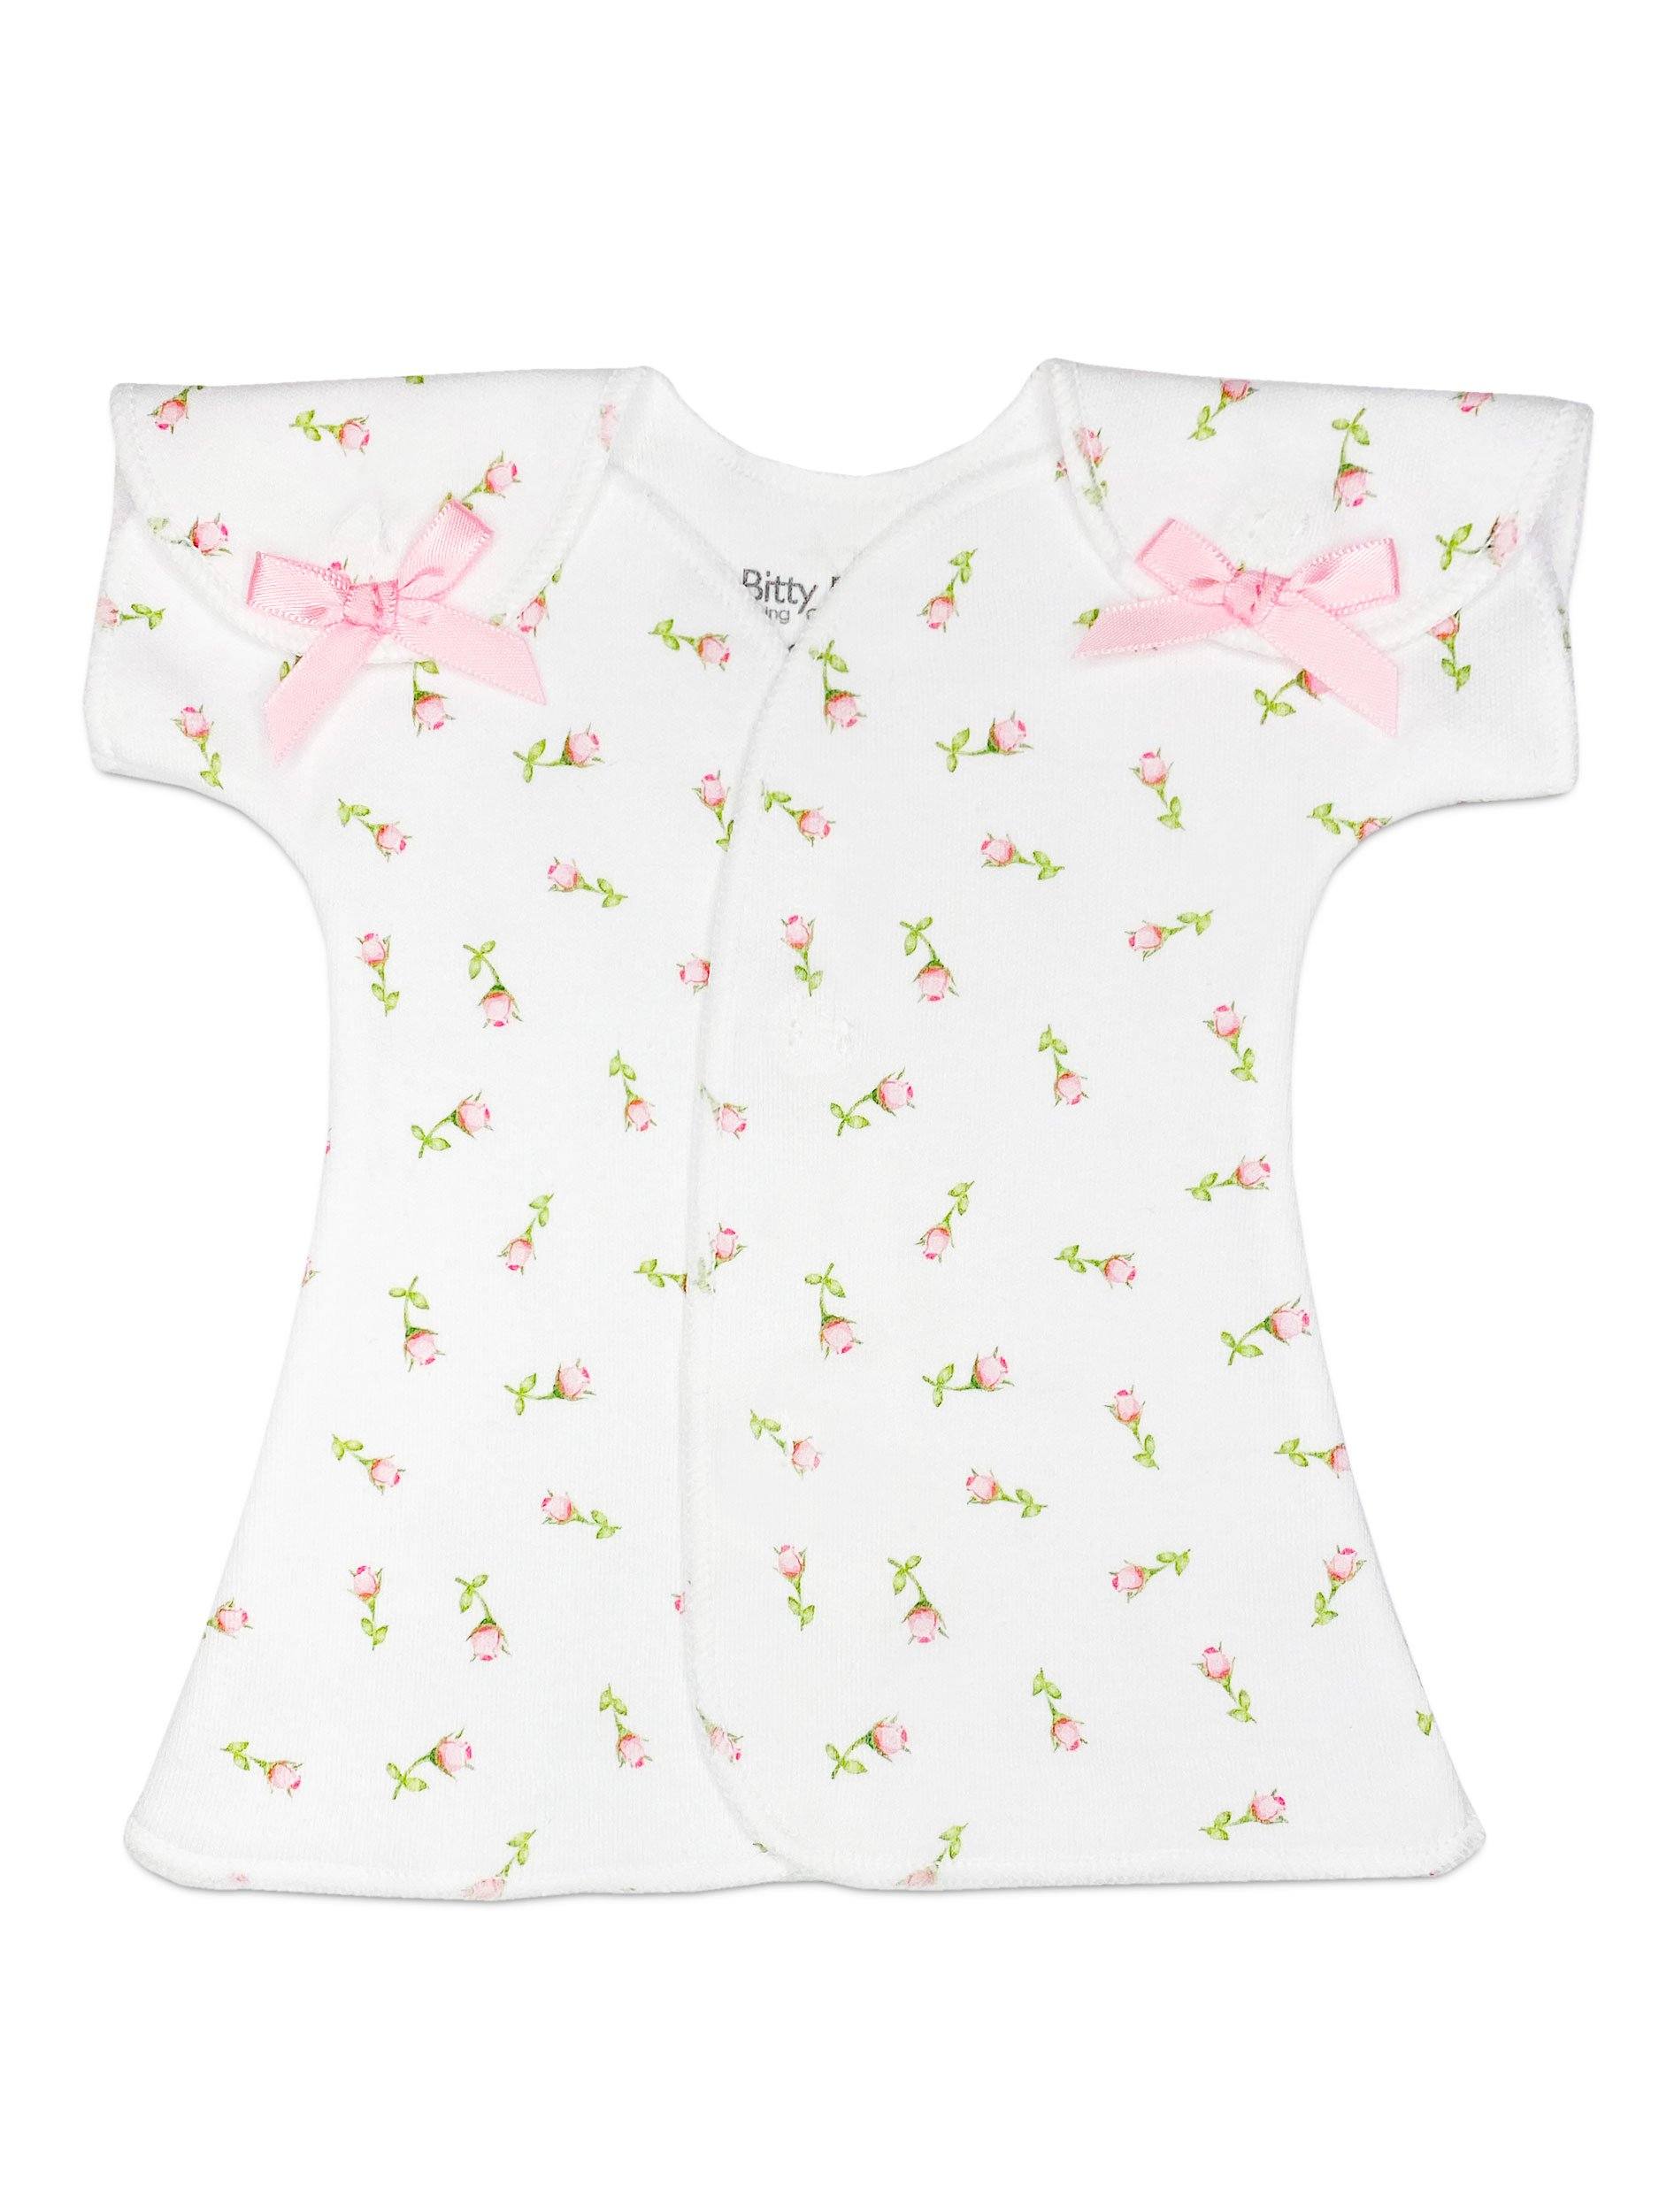 Little Rose Wrap Dress (Prem 1-3lbs & 3-5lb) - Dress - Itty Bitty Baby Clothing